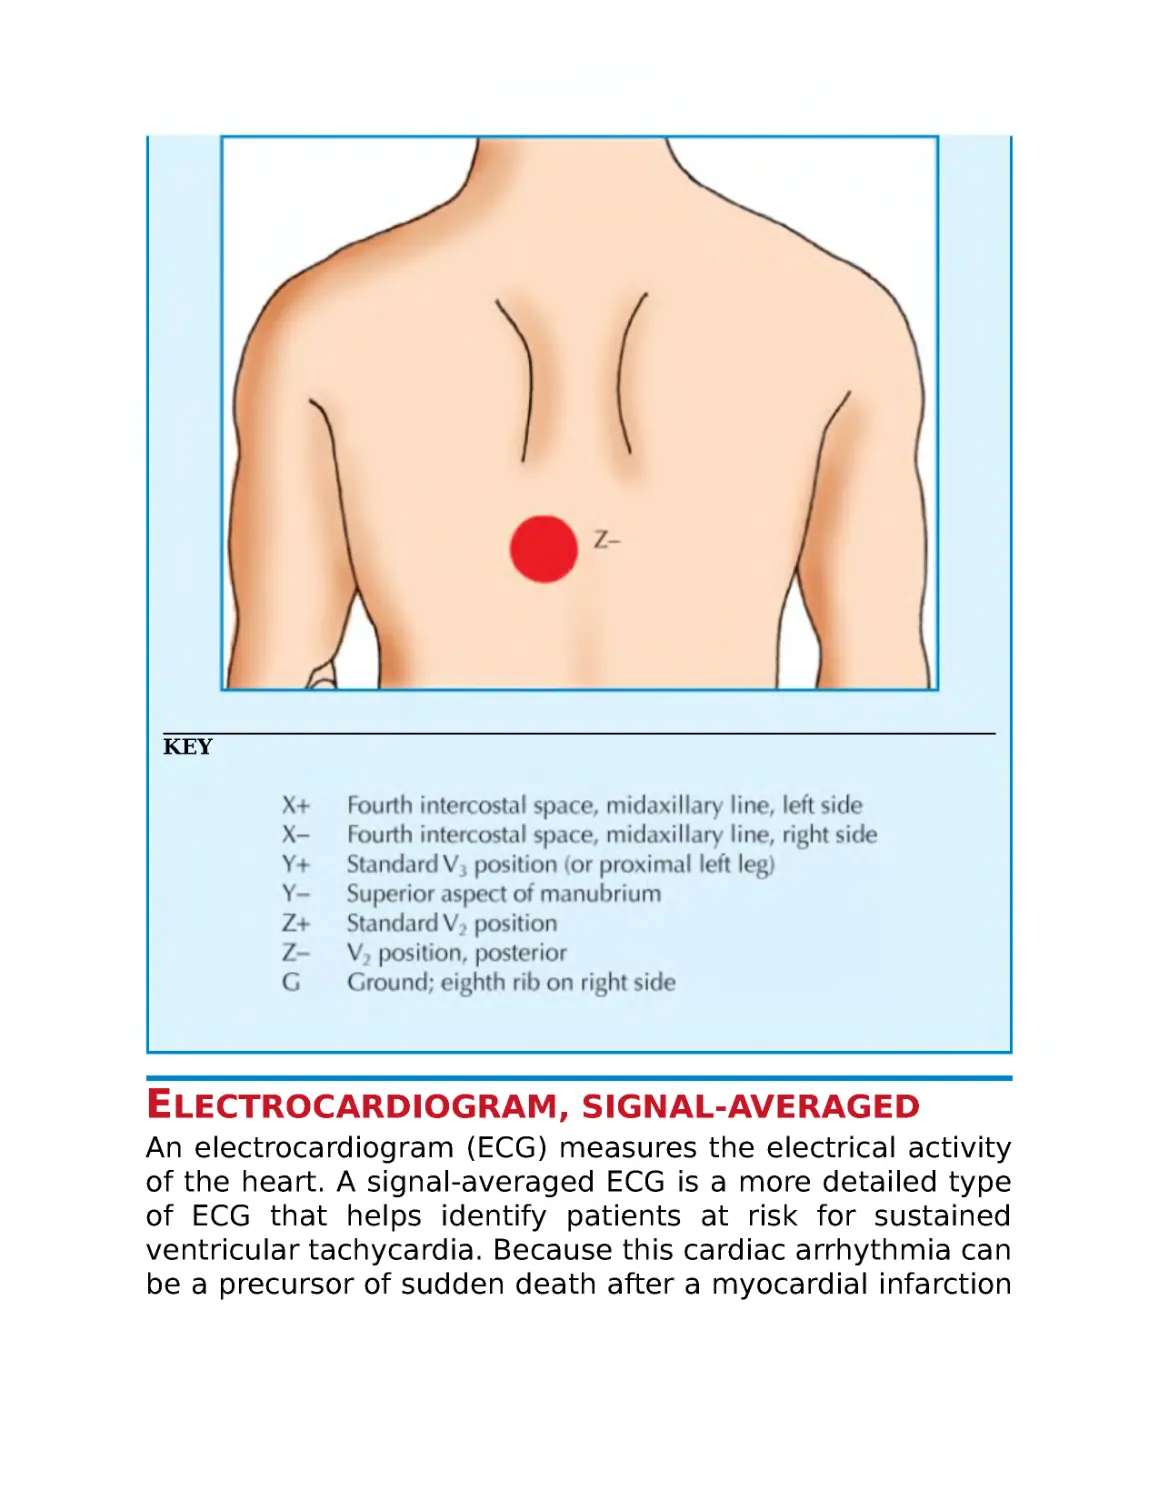 Electrocardiogram, signal-averaged